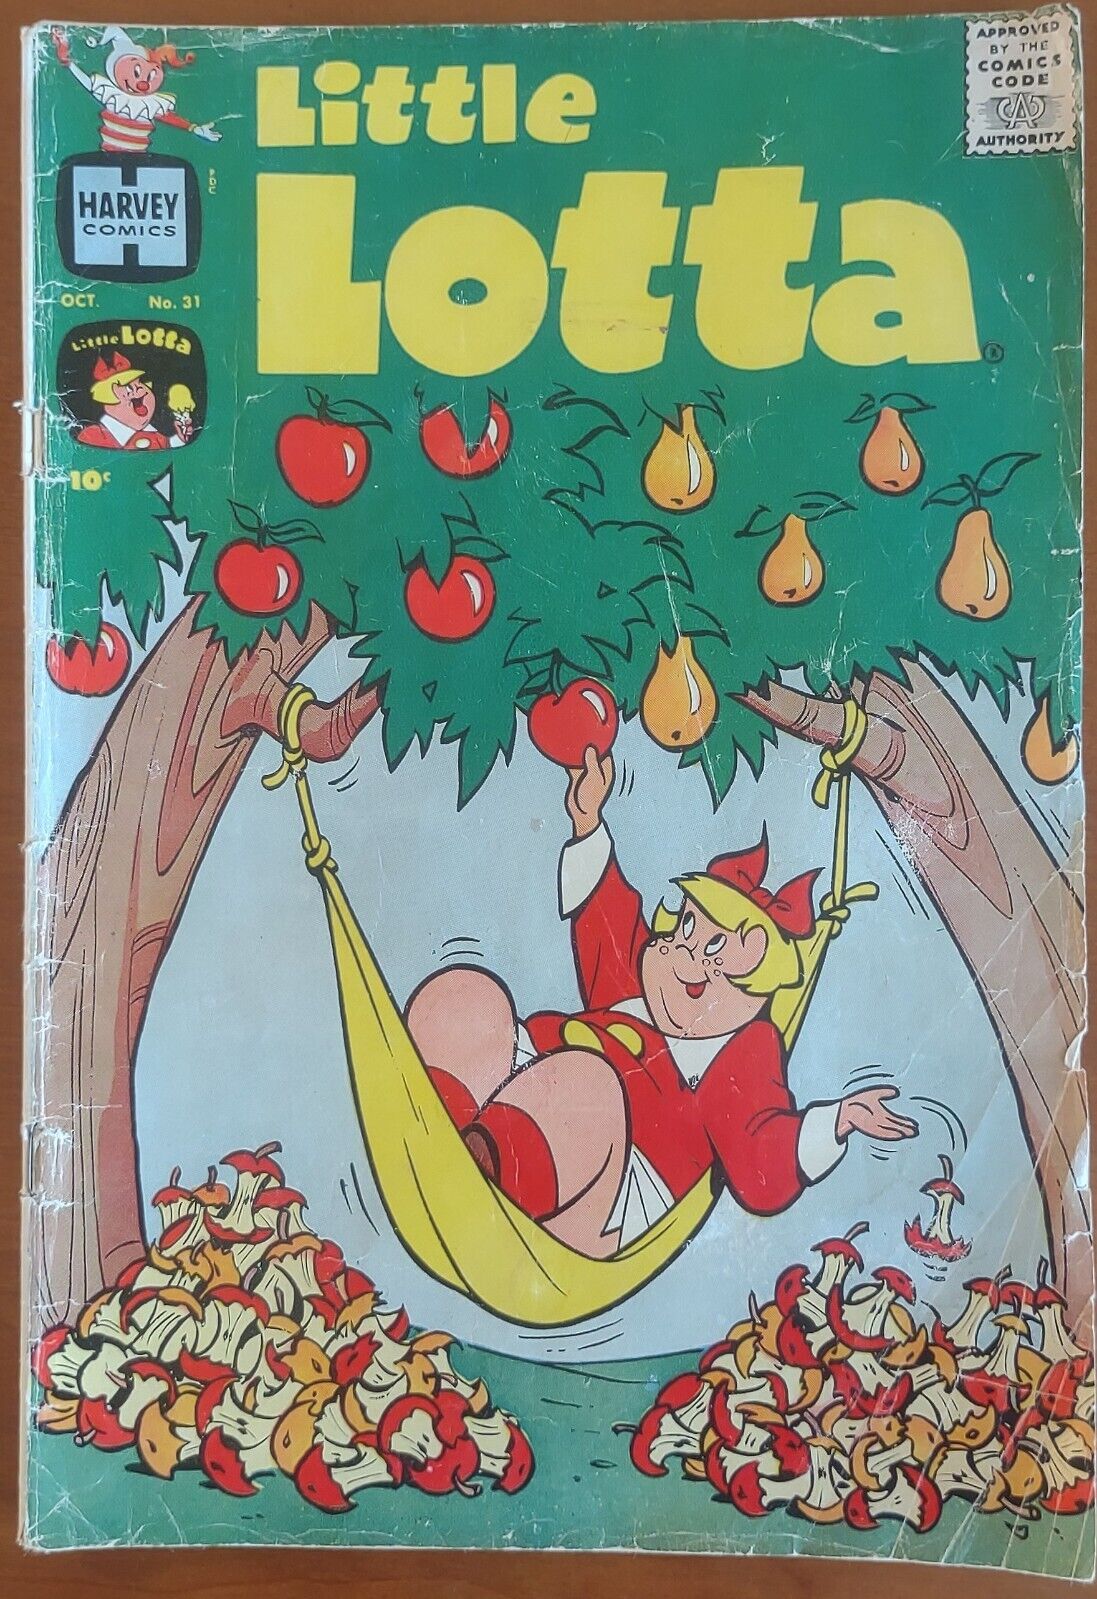 Little Lotta, Vol 1 #31, Oct 1960 (Harvey)